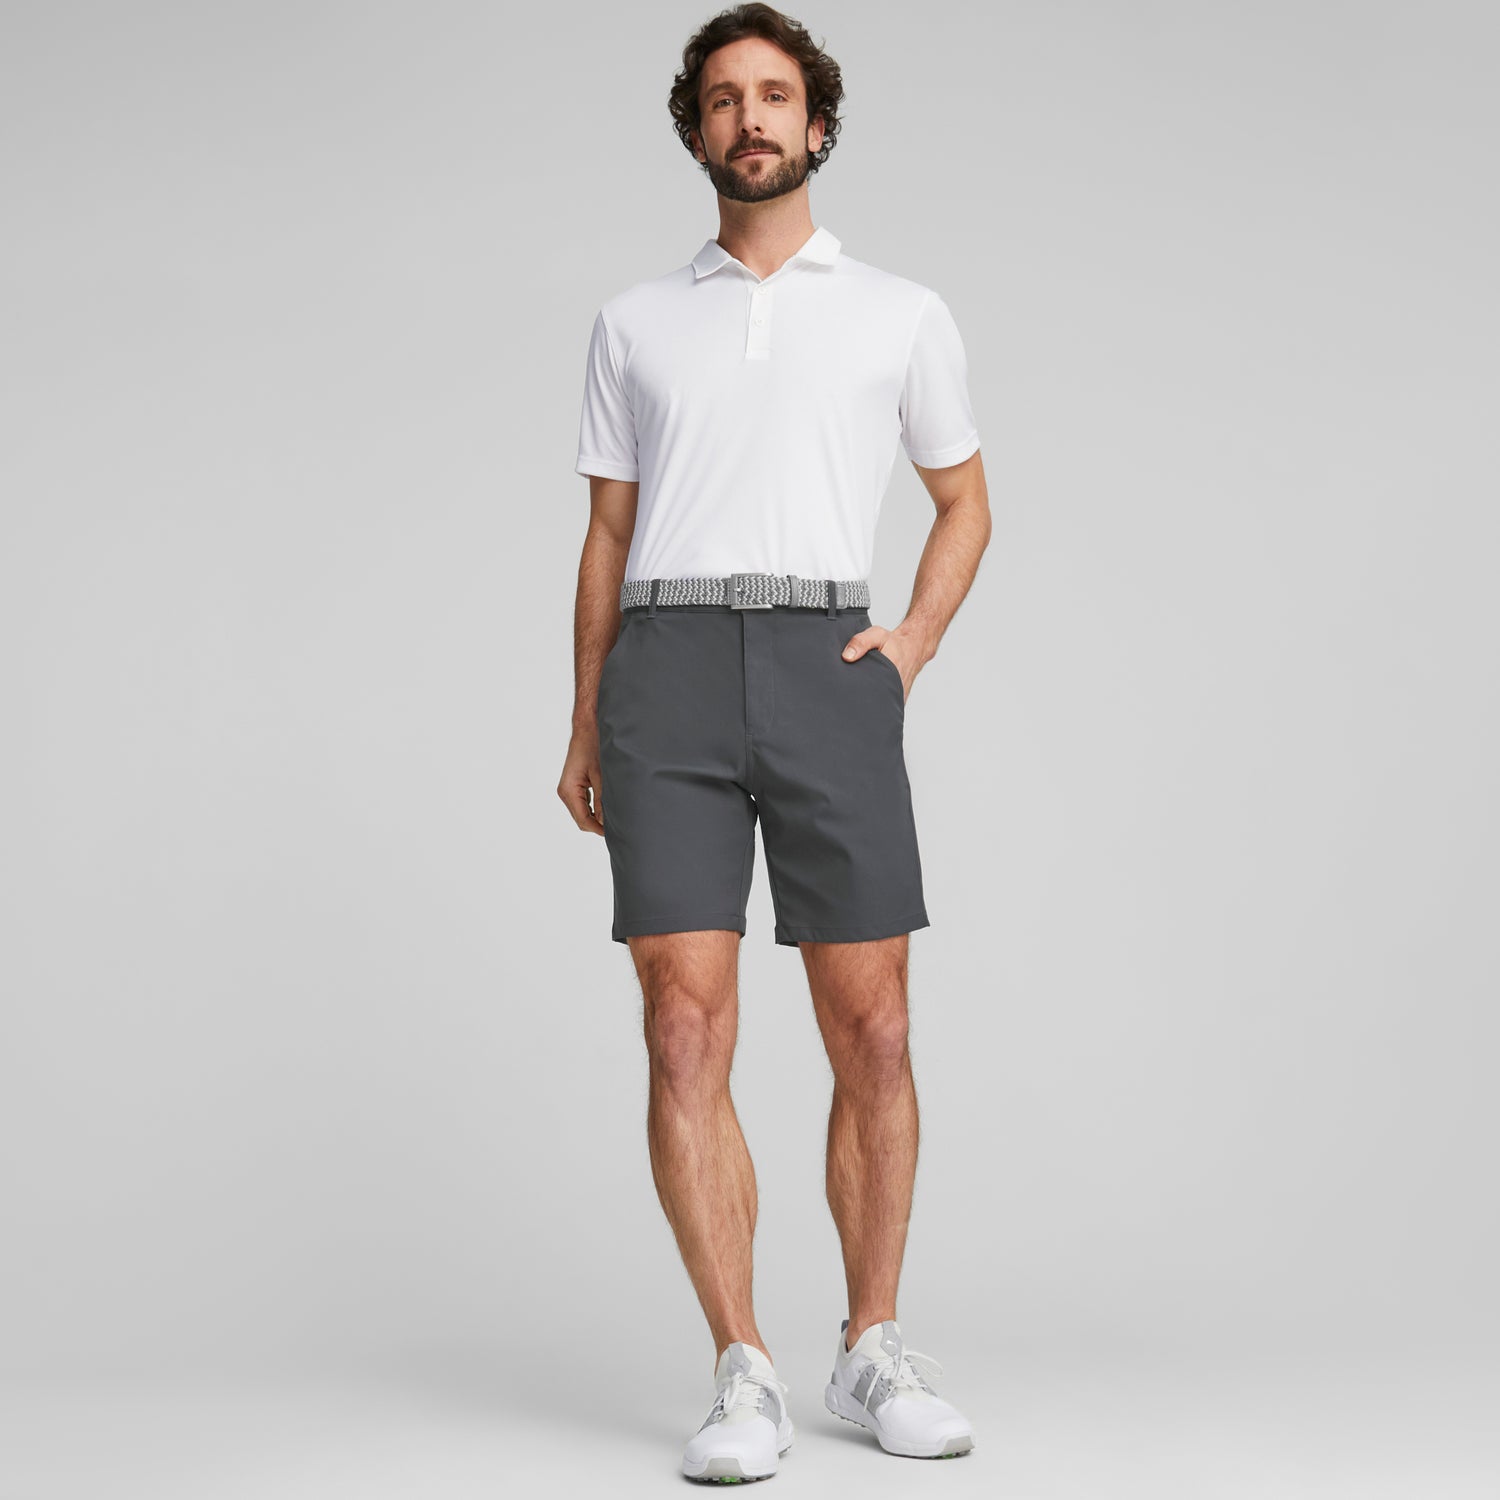 Men's Golf Shorts 8 - All in Motion